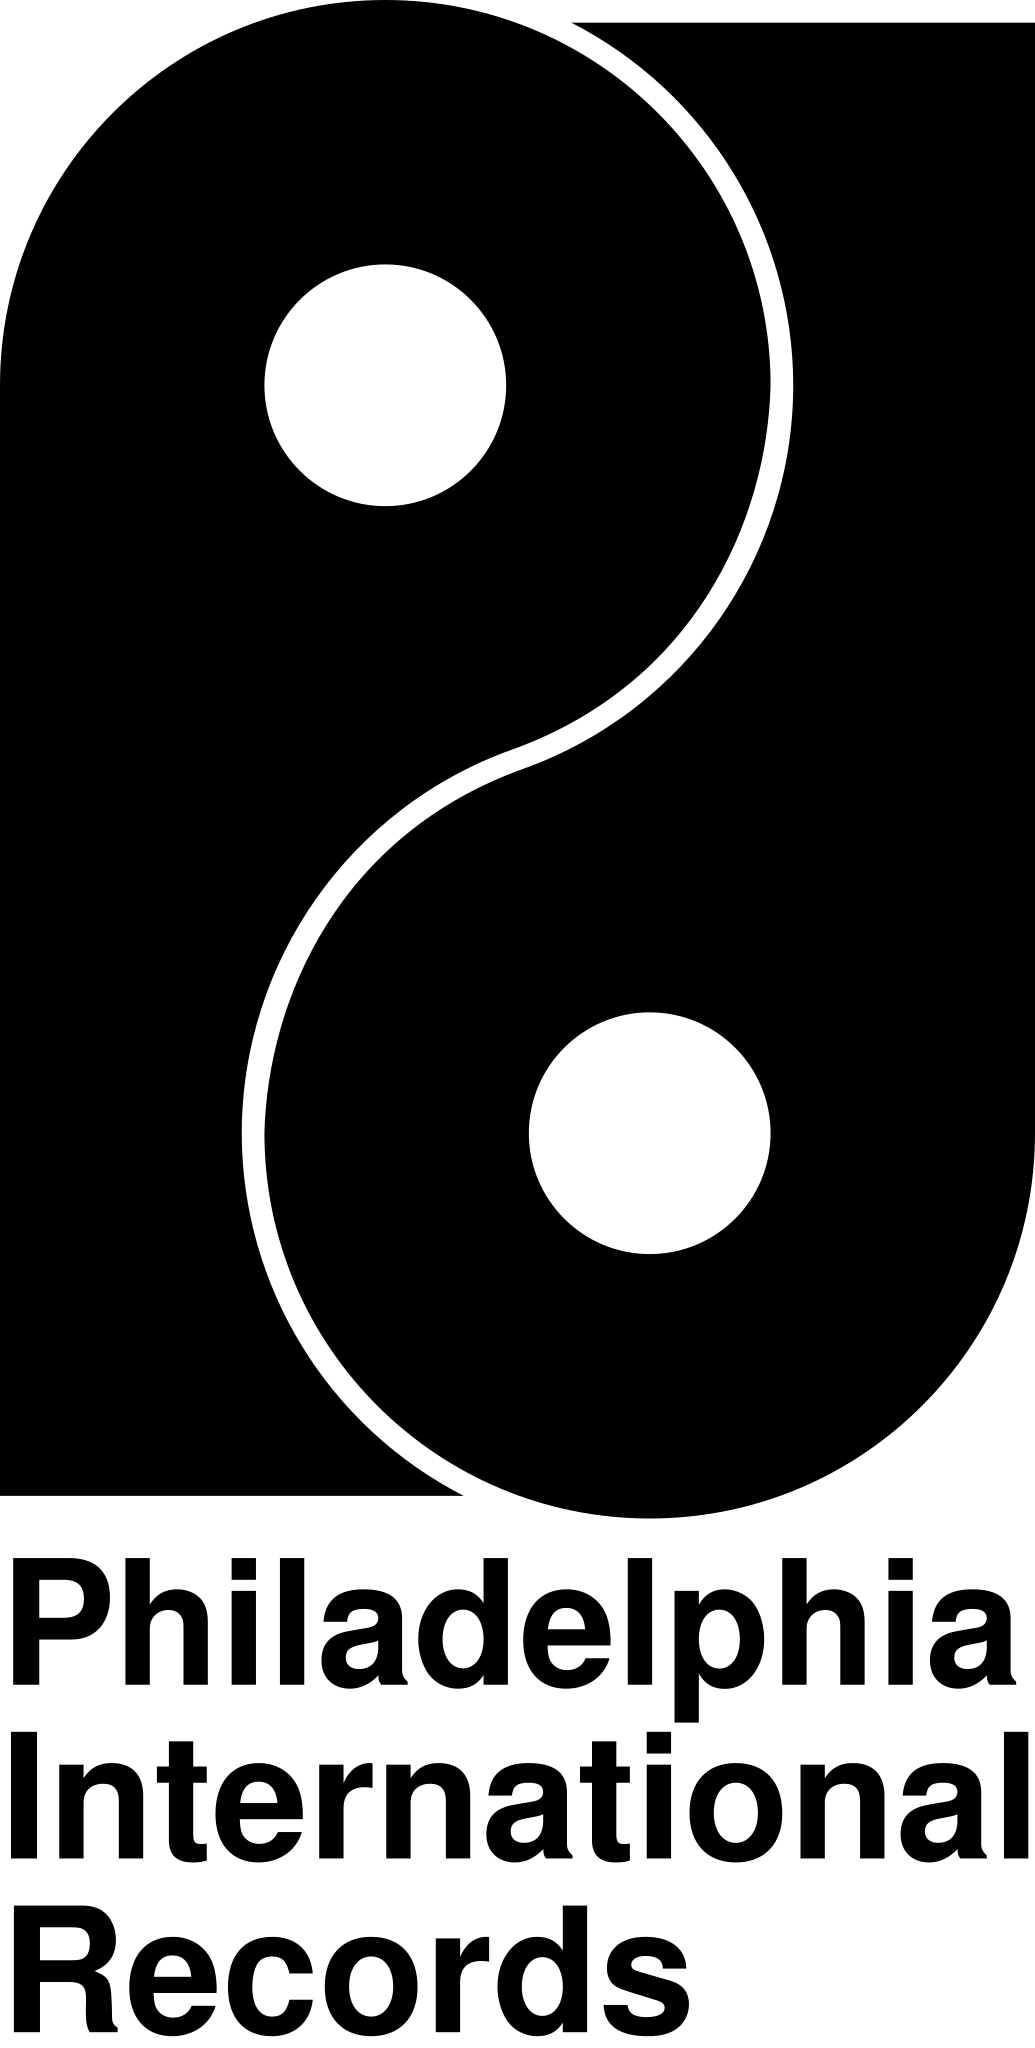 File:Philadelphia International Records logo with wordmark - black